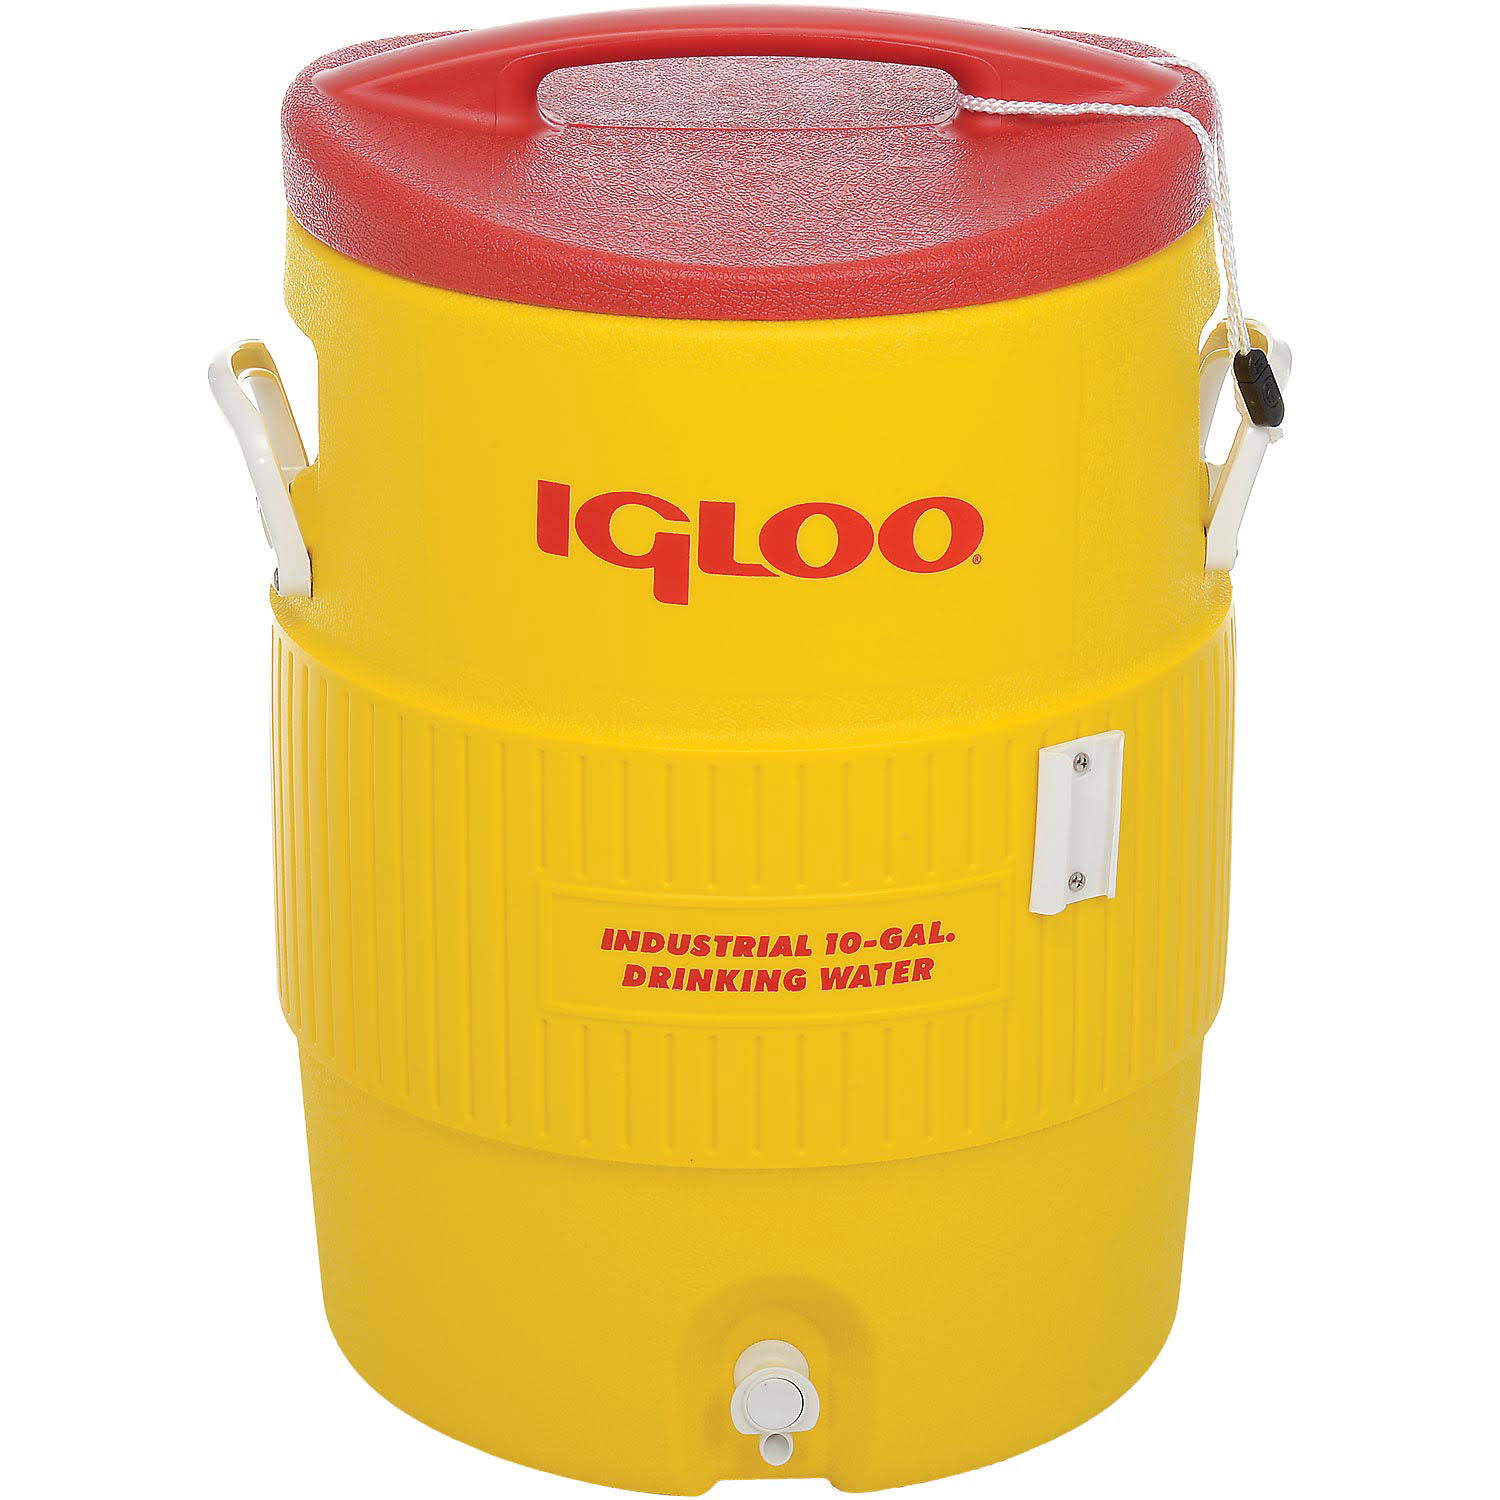 Igloo Industrial Water Cooler - 10gal